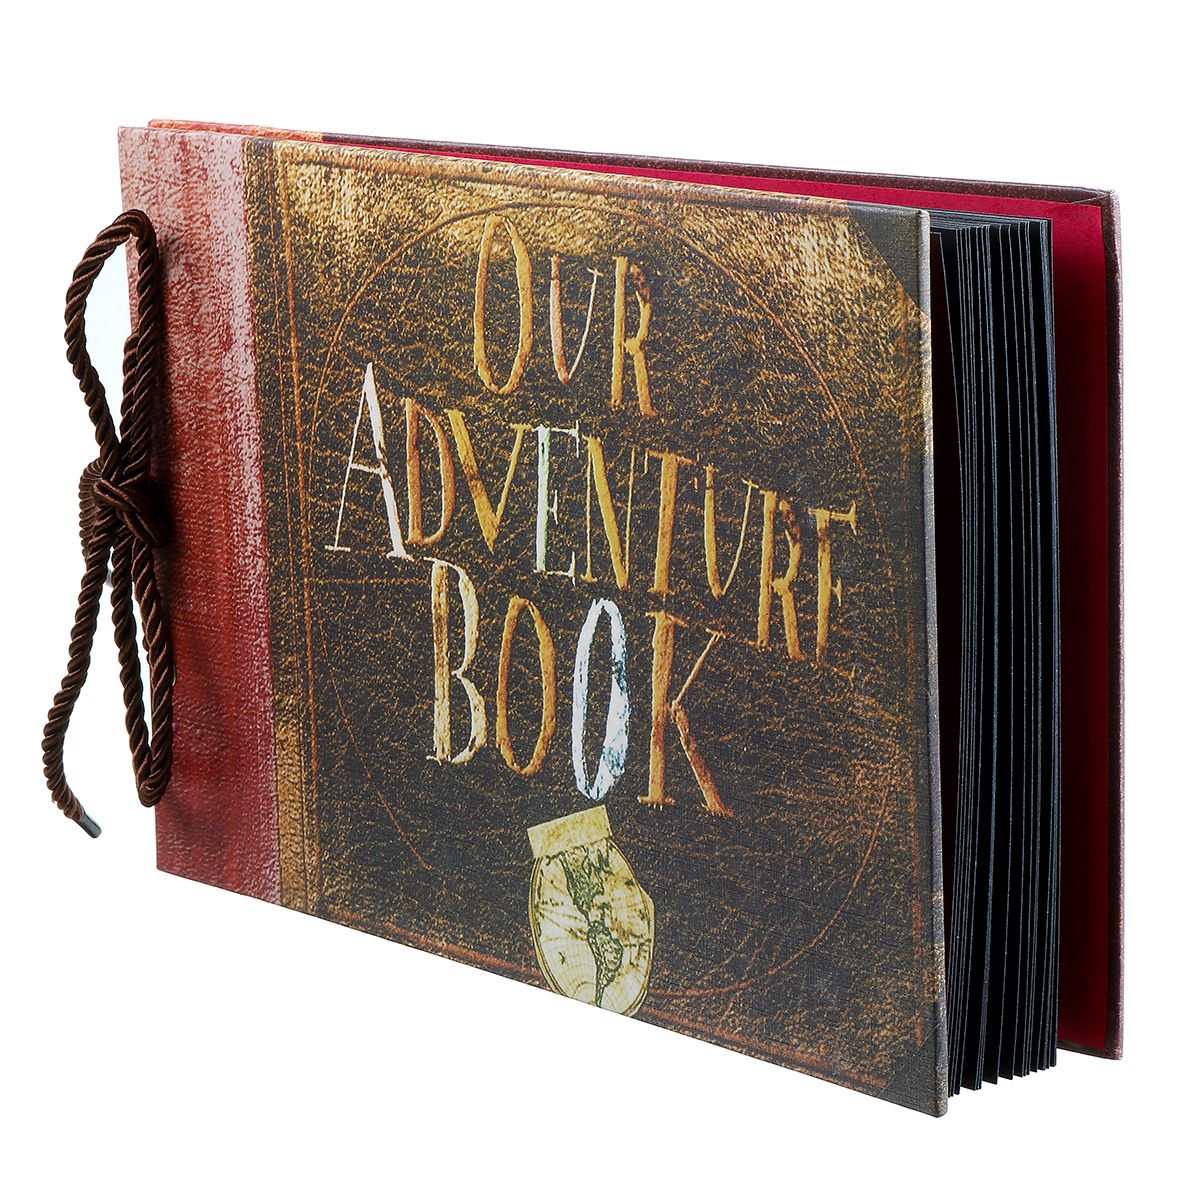 MyOur-Adventure-Book-DIY-2040-Sheets-Black-Photo-Album-Scrapbook-1639892